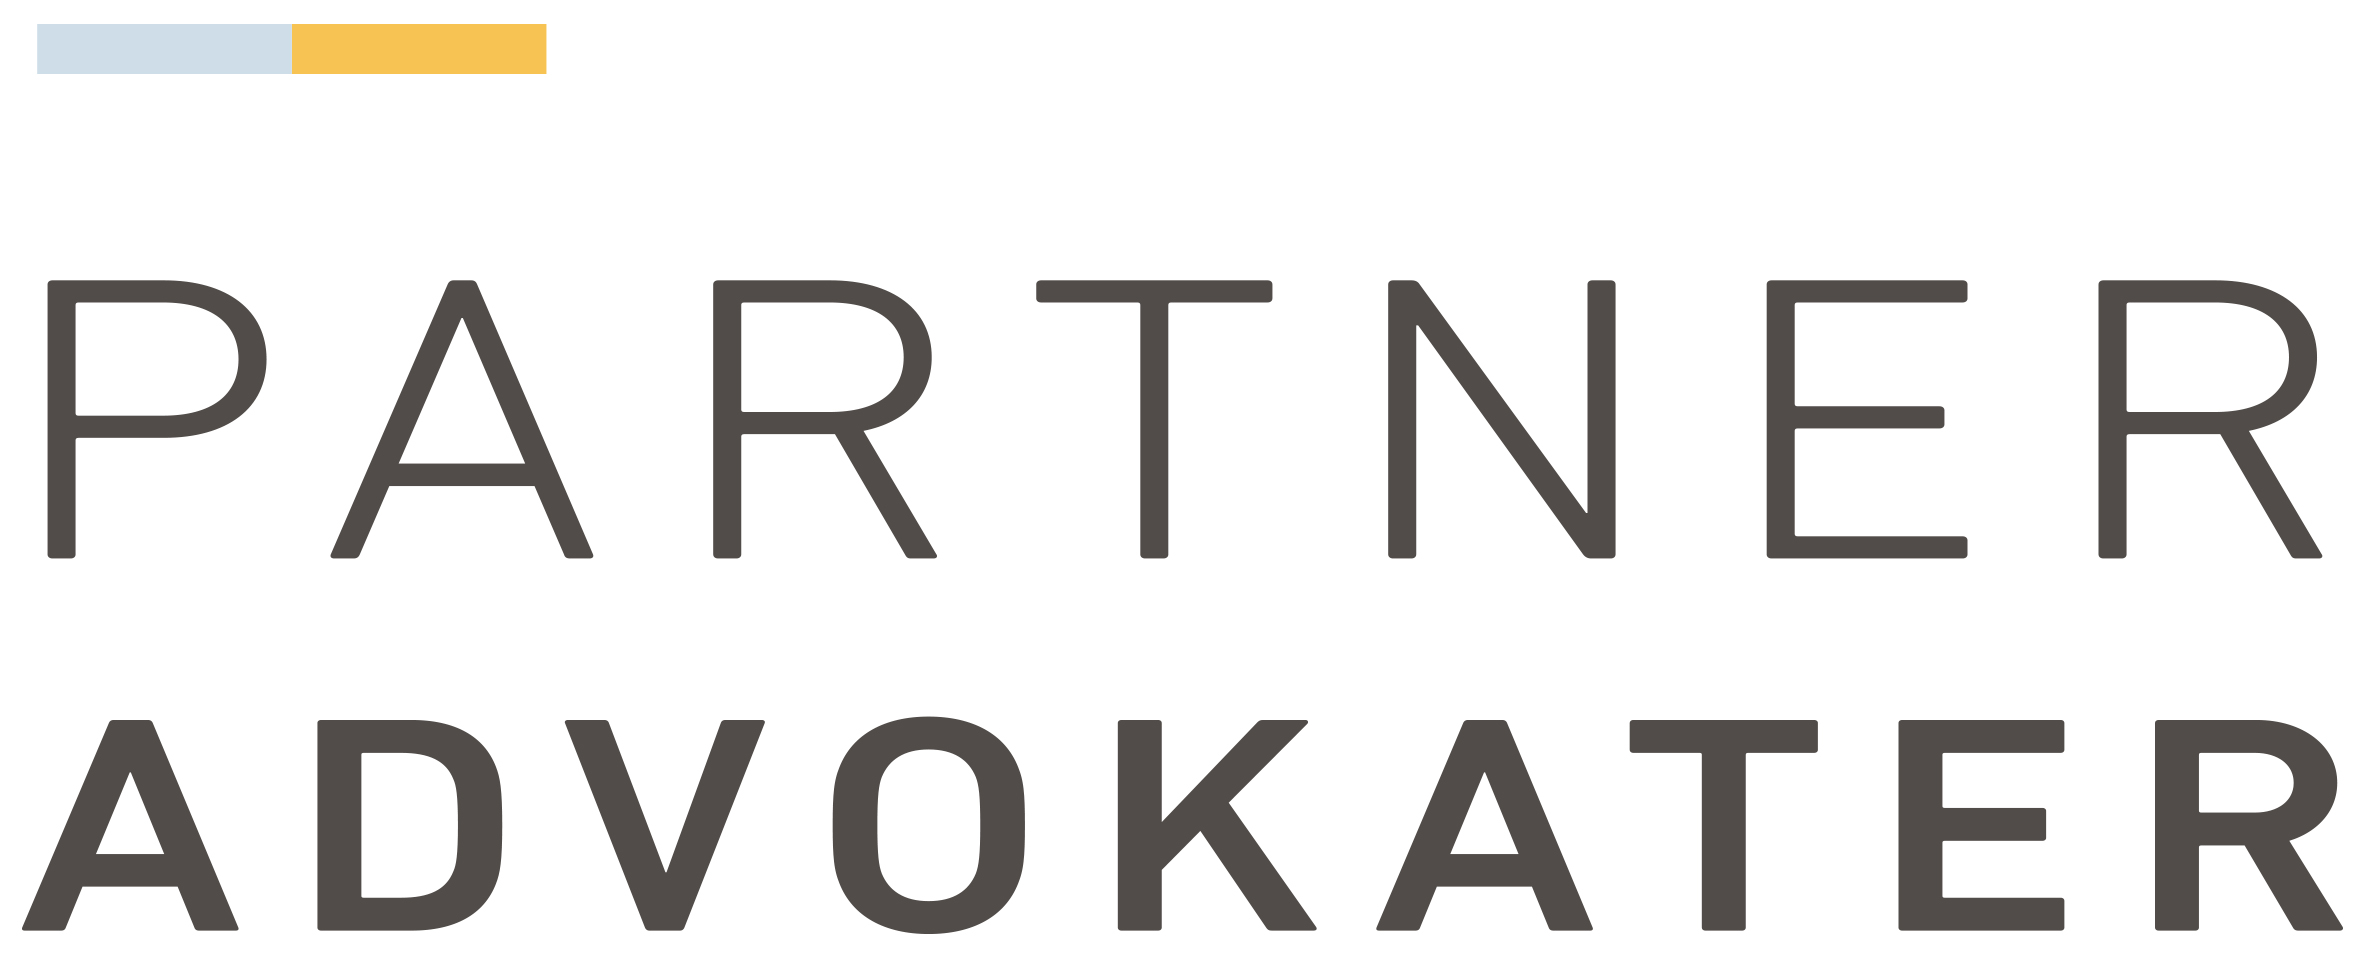 partneradvokater_logo